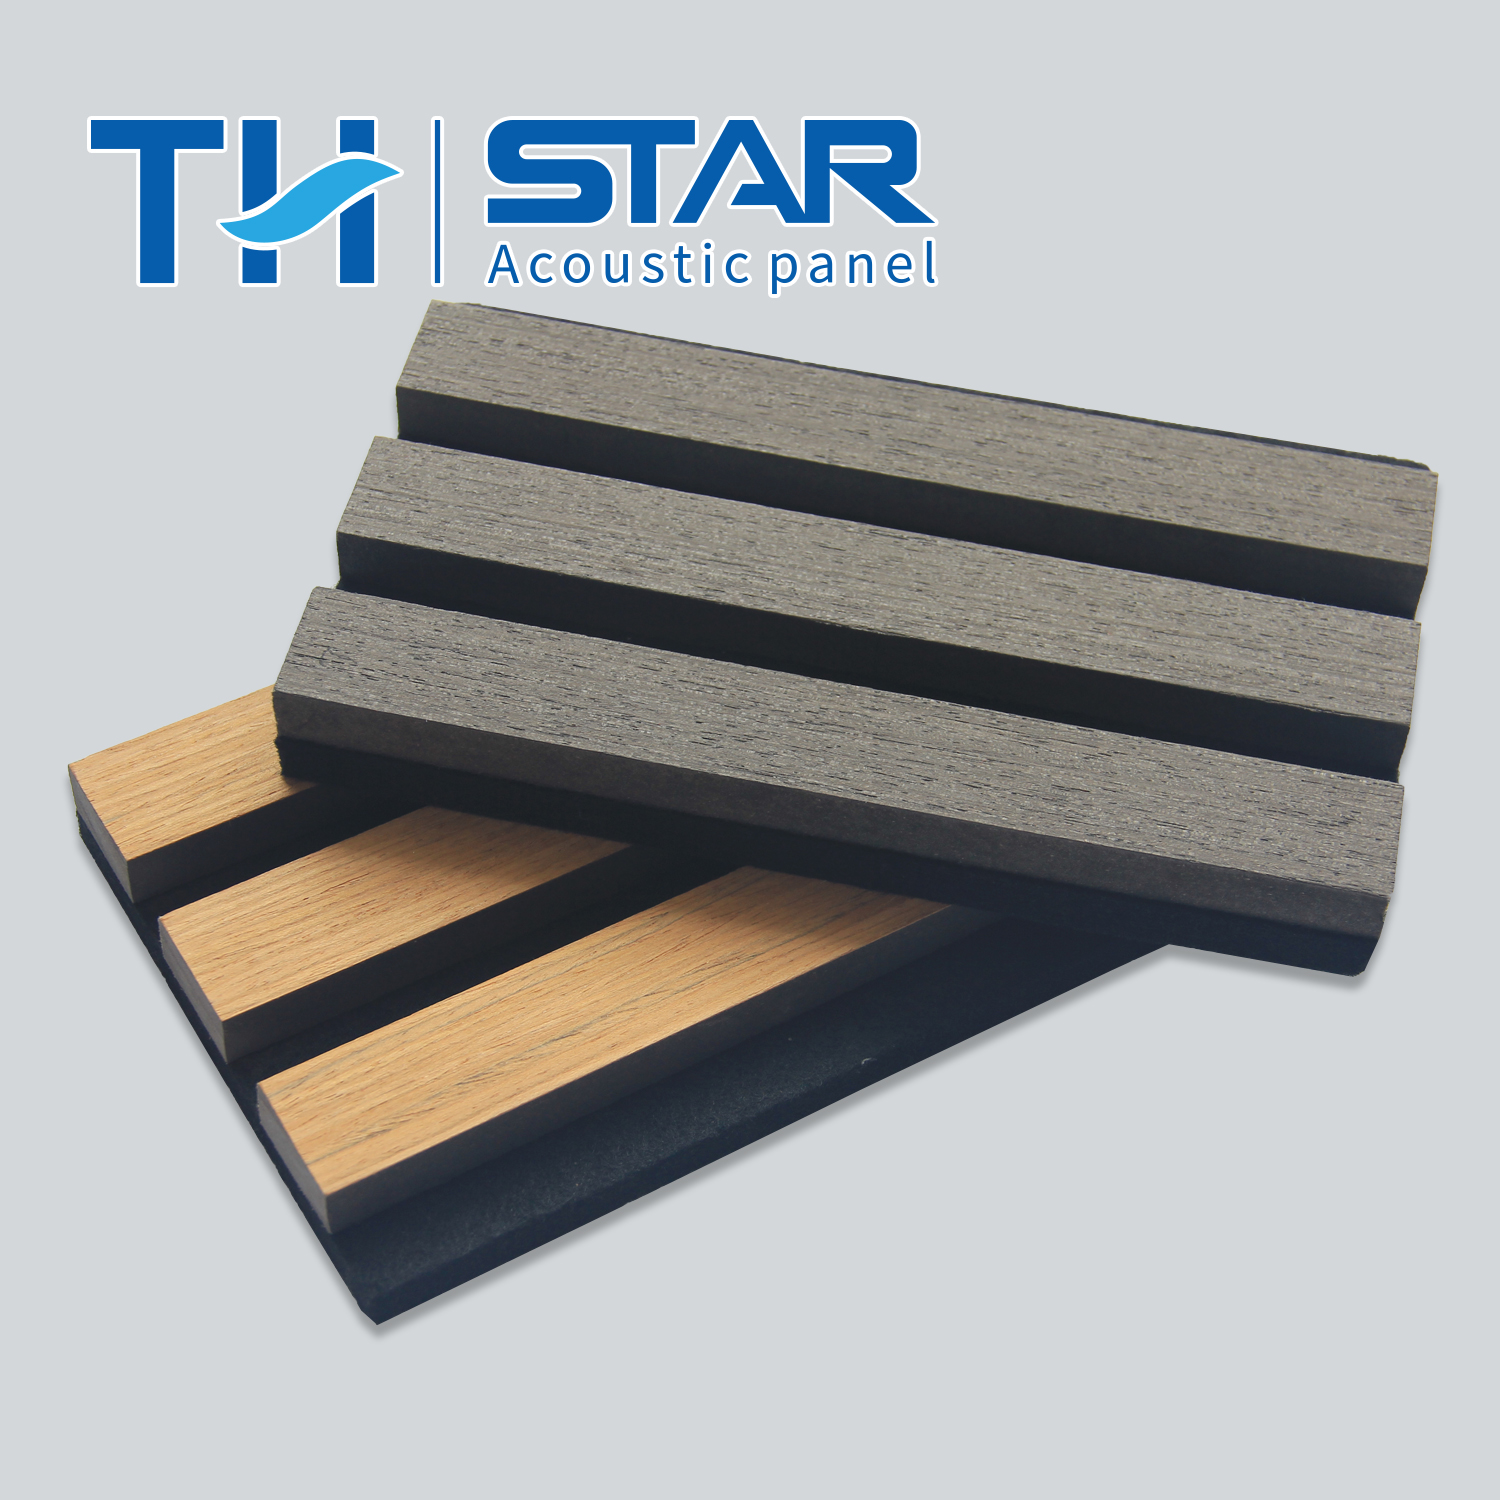 Fireproof polyester fiber wooden slats acoustic wall panel